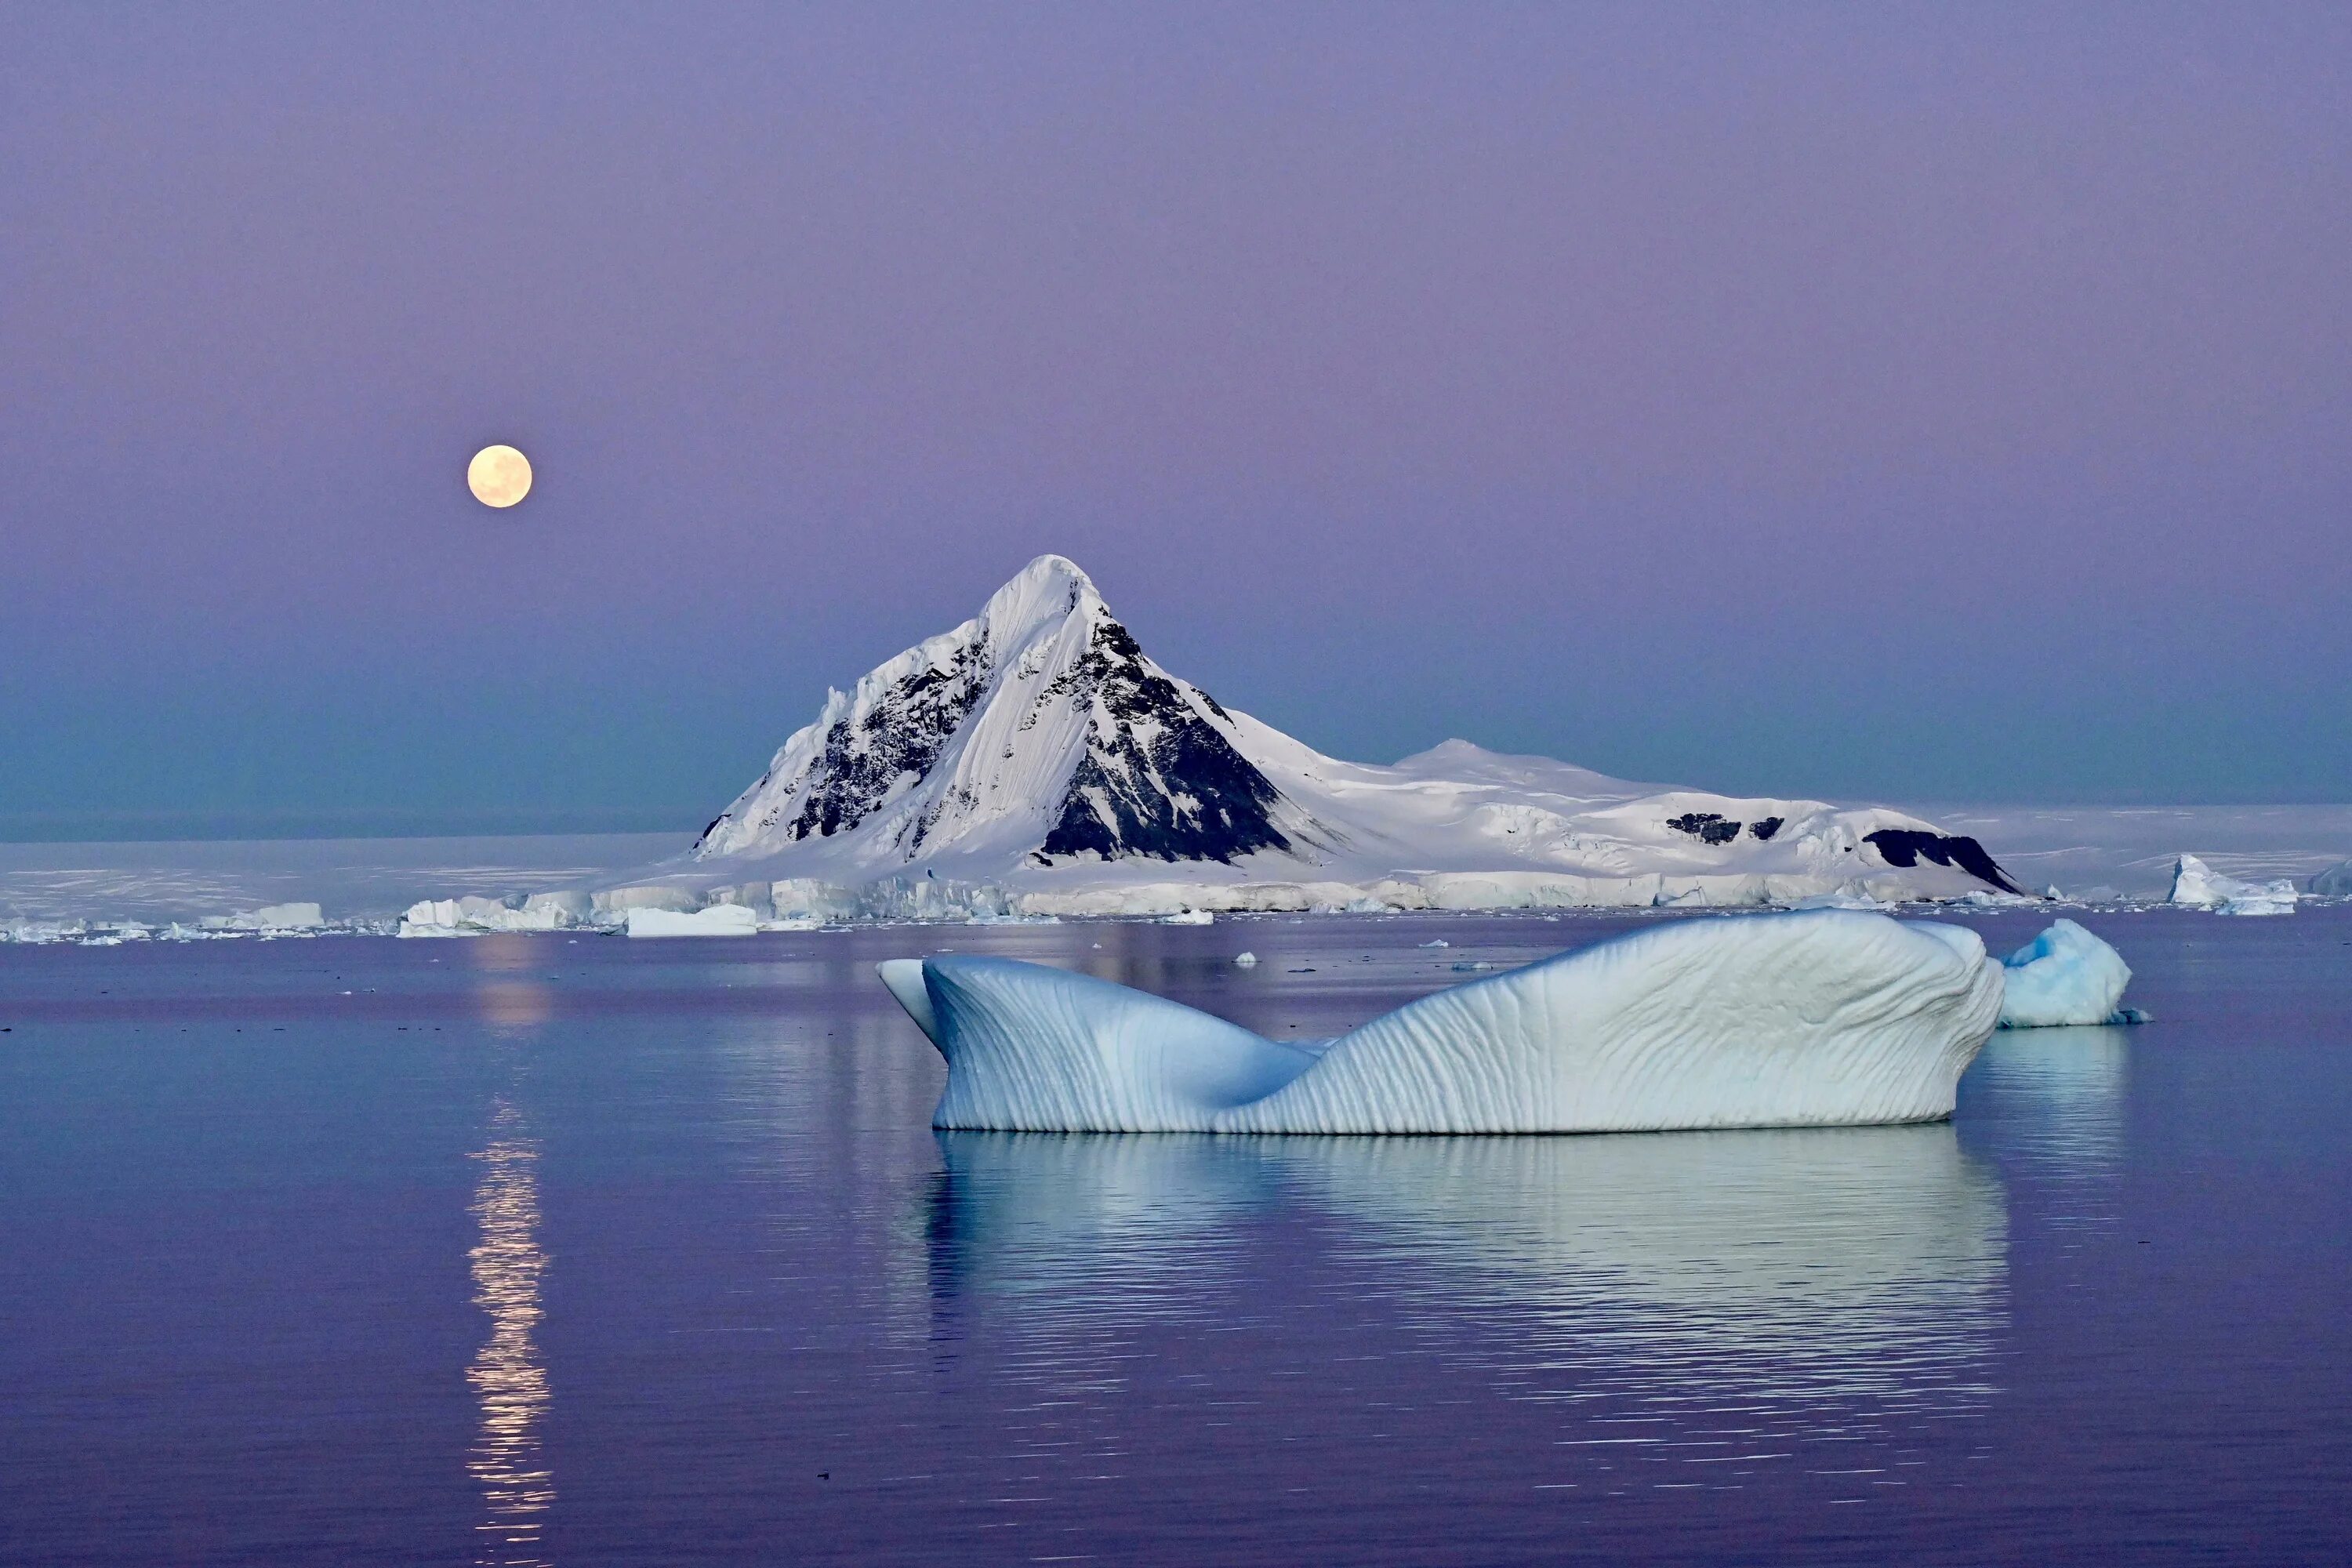 Море Уэдделла в Антарктиде. Море Уэдделла ледник. Бухта китовая Антарктика. Бухта Парадиз Антарктида. Атлантический океан в антарктиде